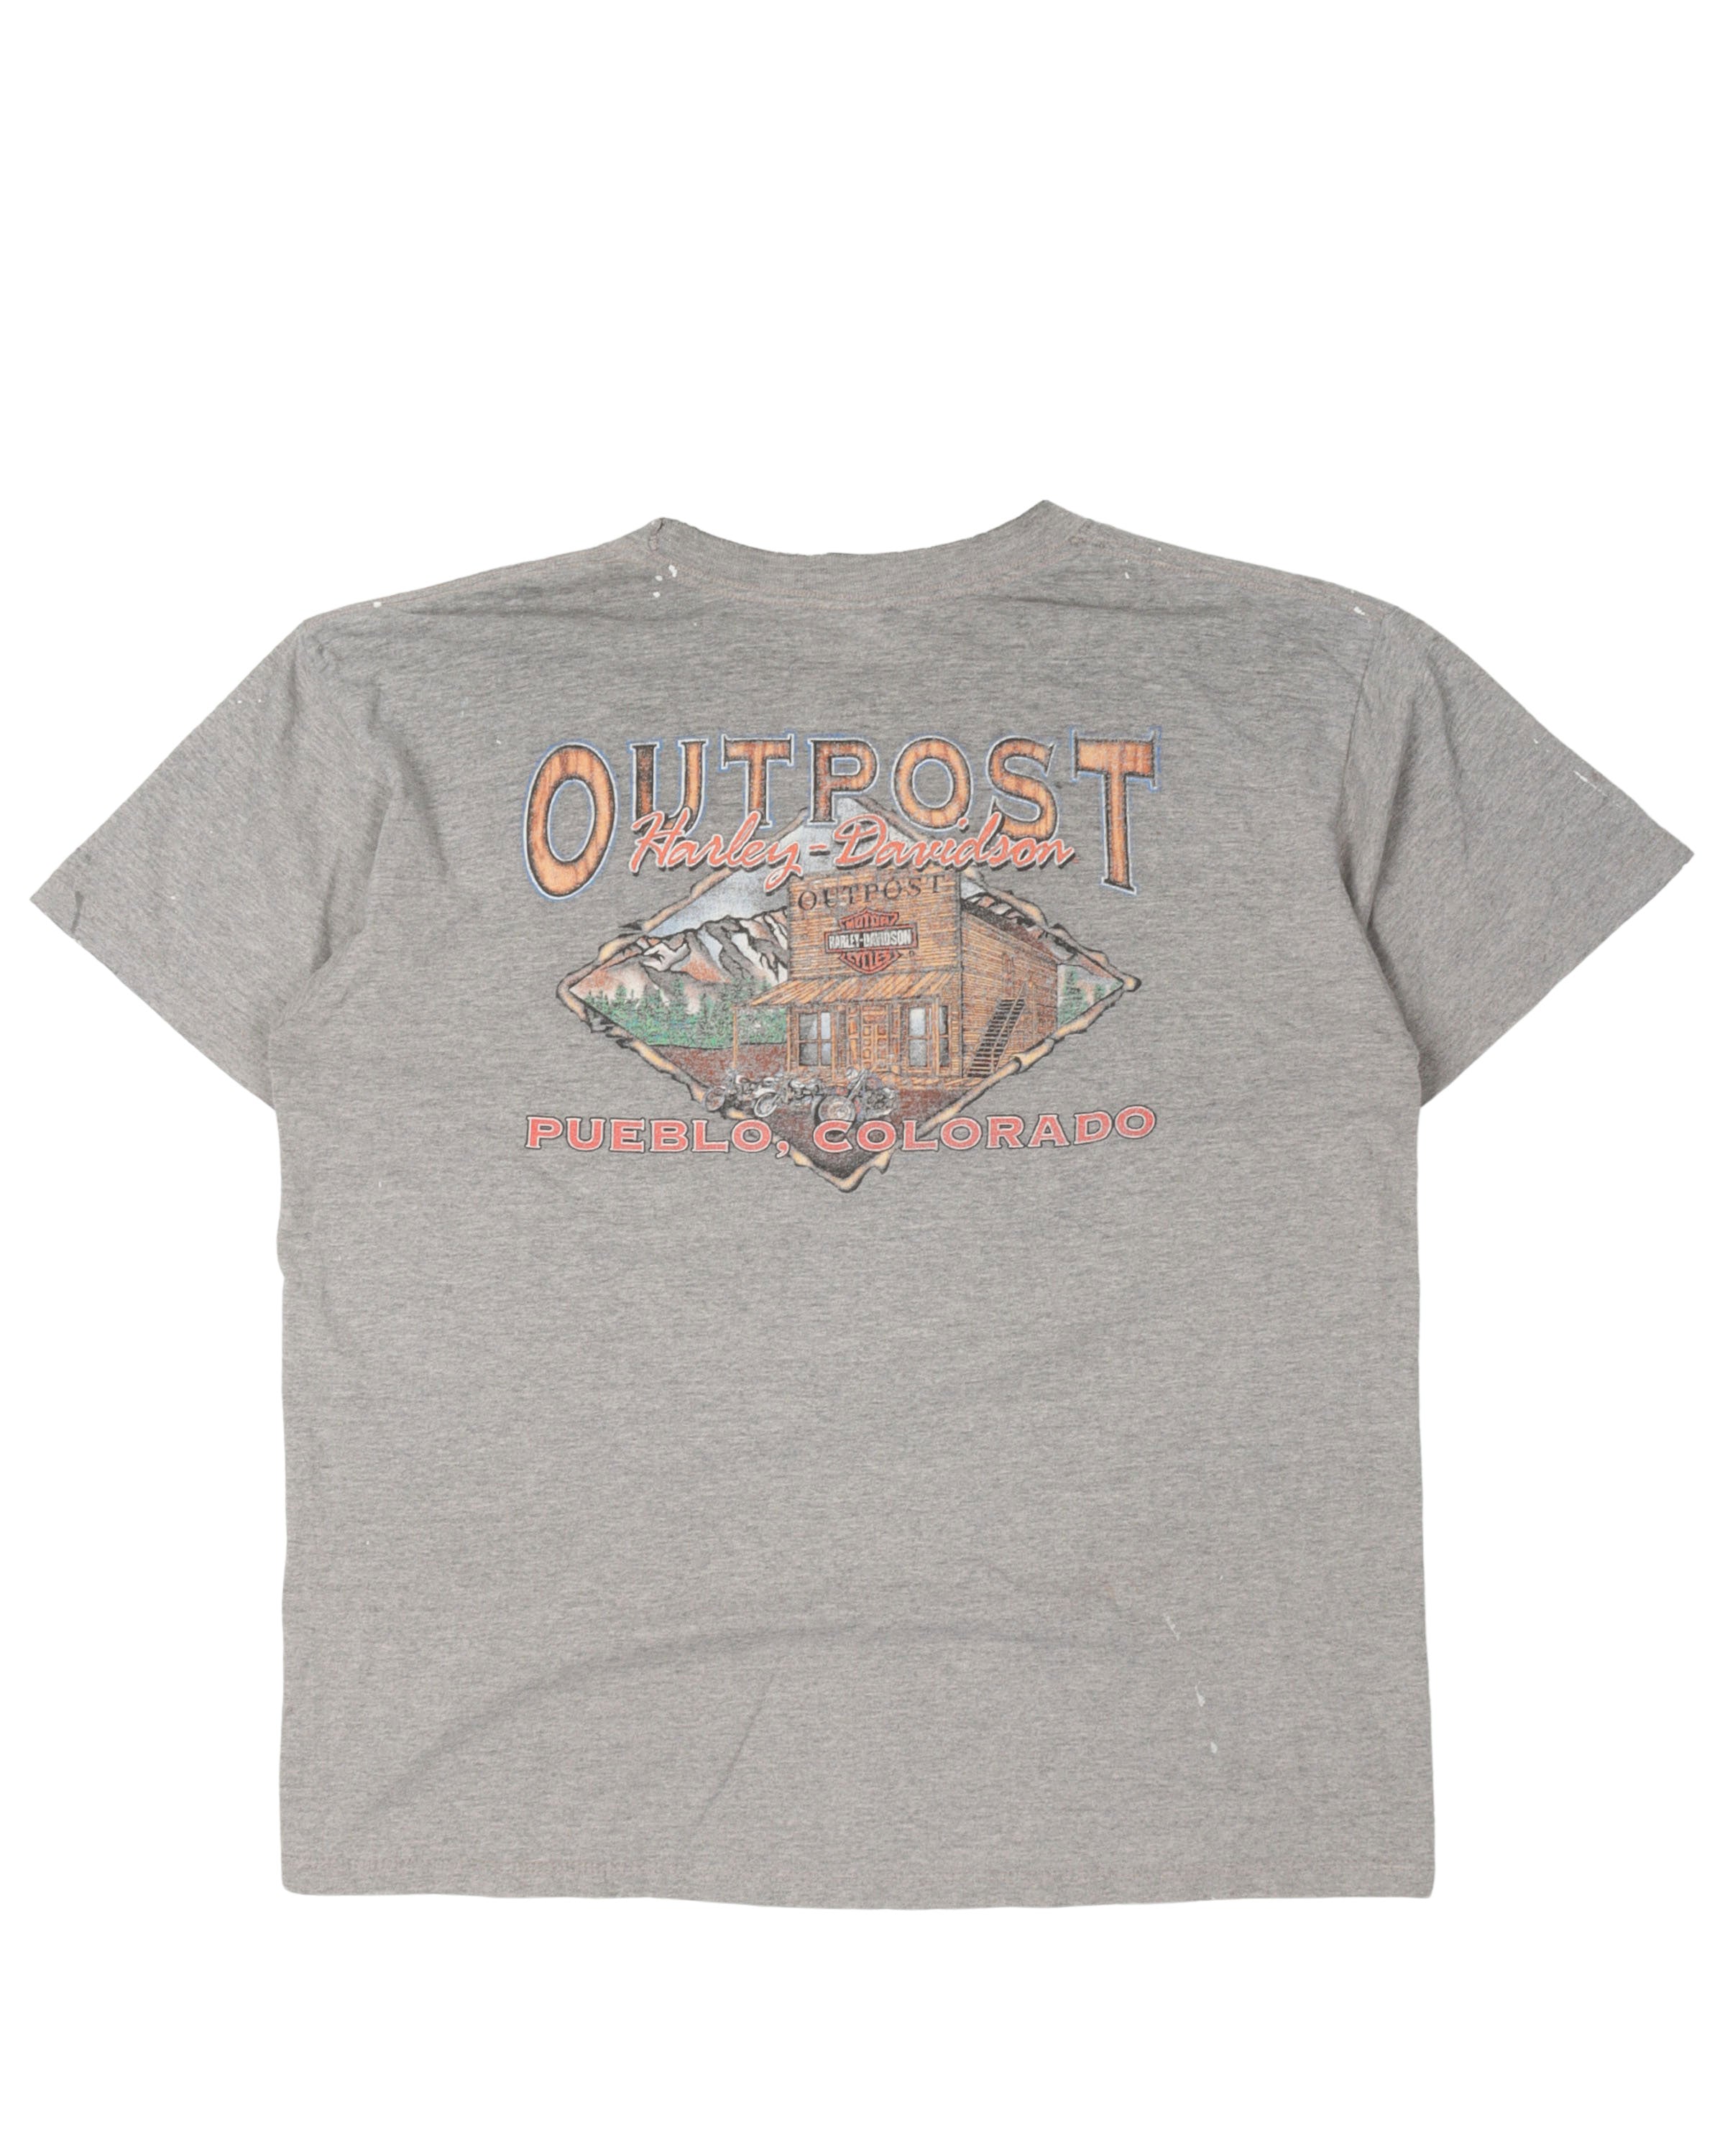 Harley Davidson Outpost T-Shirt